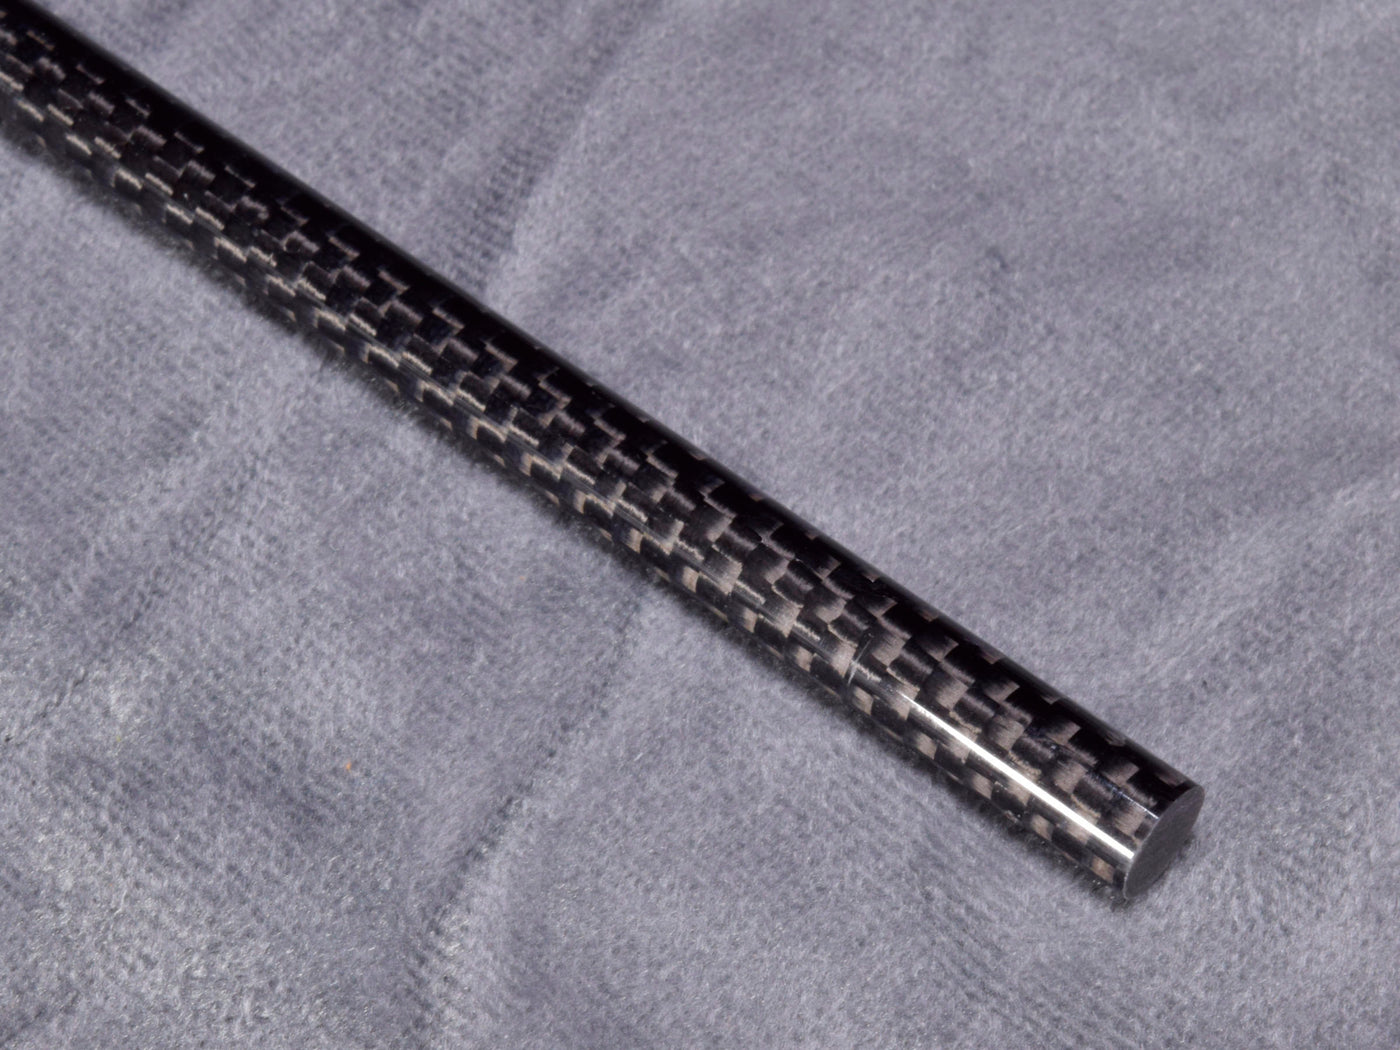 12mm x 500mm 3K Wrapped Carbon Fiber Rod